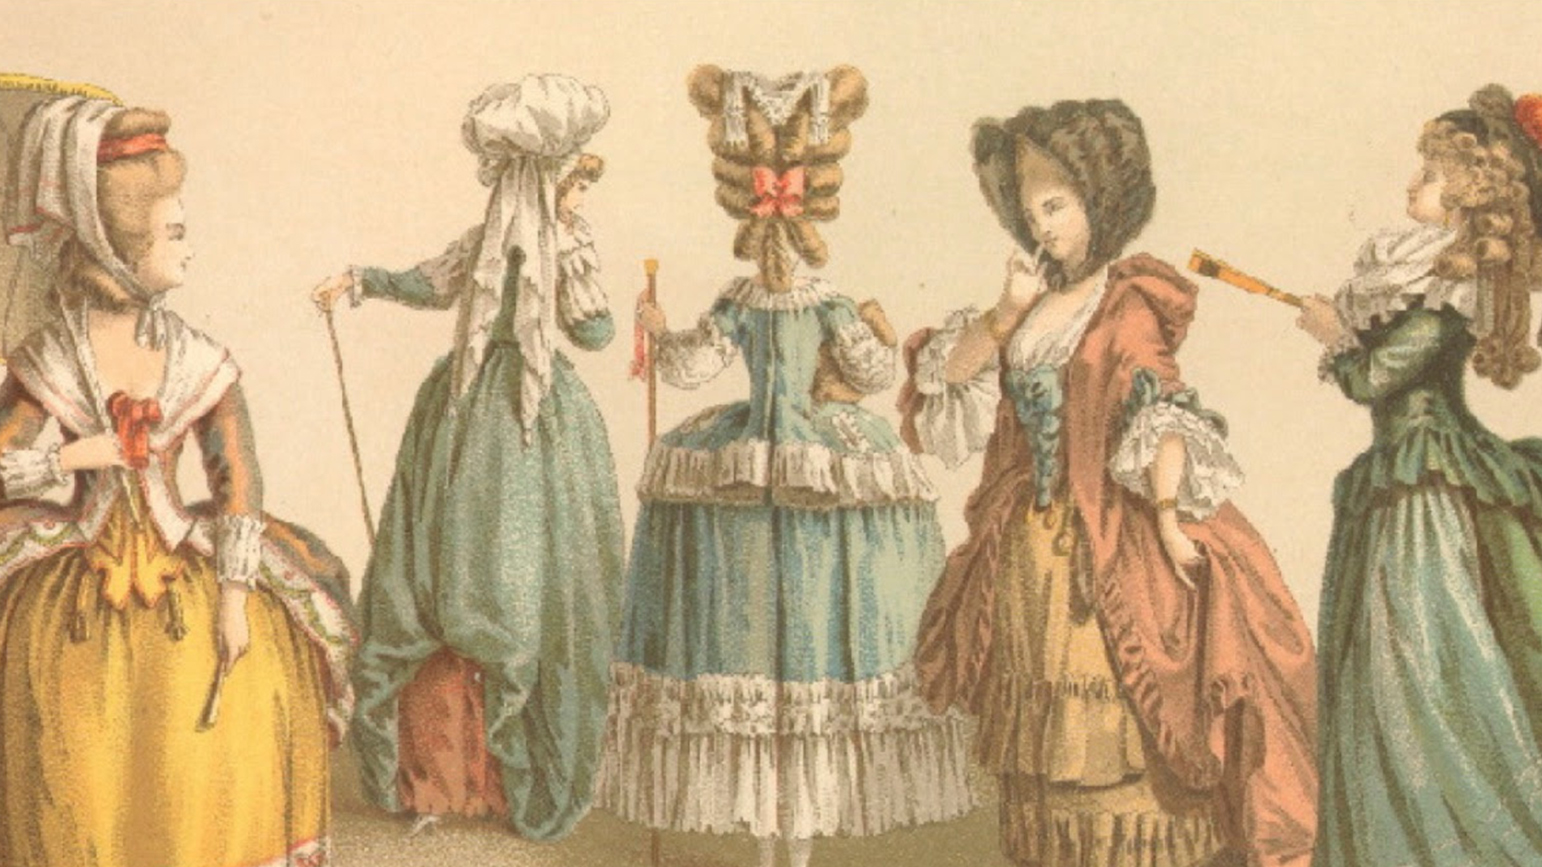 Victorian illustration of elaborately dressed women